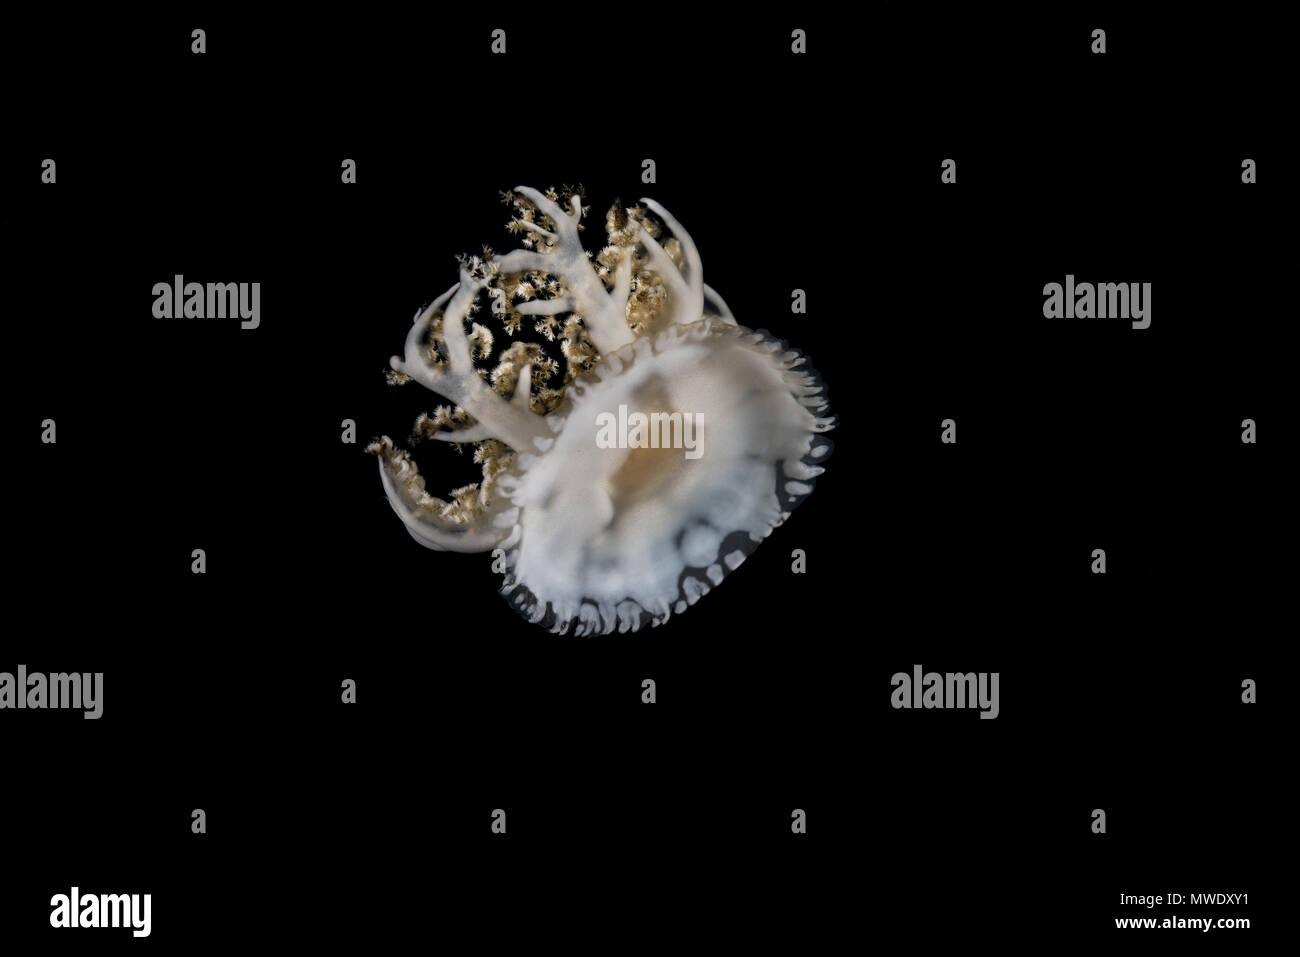 Indian Ocean, Maldives. 21st Mar, 2018. Upside Down Jellyfish (Cassiopea andromeda) in the night Credit: Andrey Nekrasov/ZUMA Wire/ZUMAPRESS.com/Alamy Live News Stock Photo